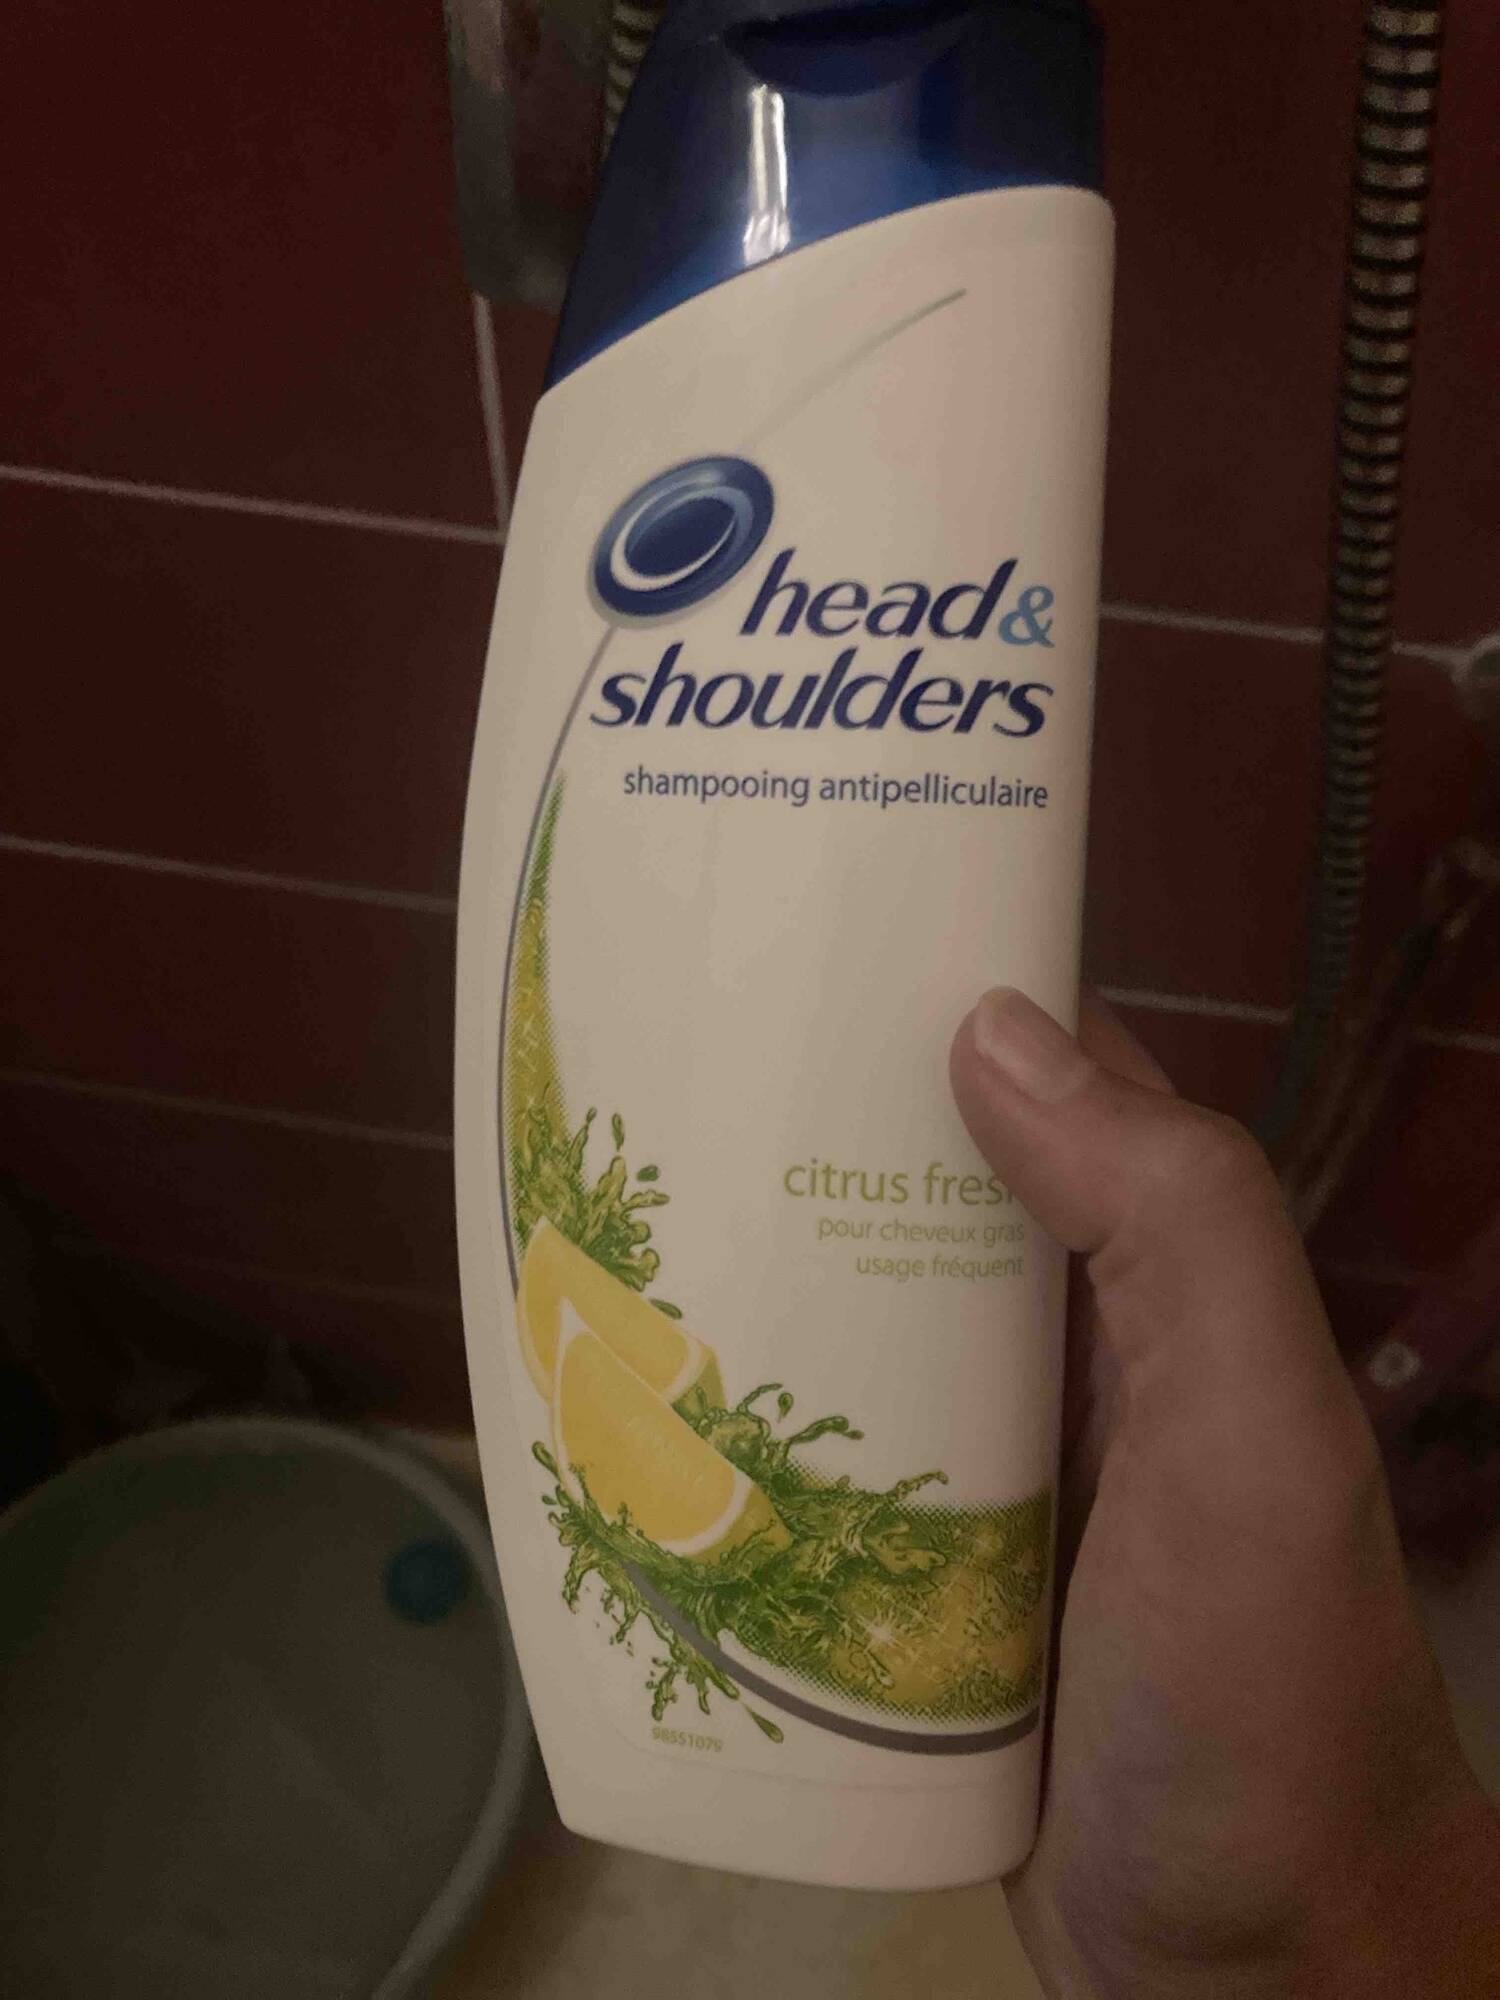 HEAD & SHOULDERS - Citrus fresh - Shampooing